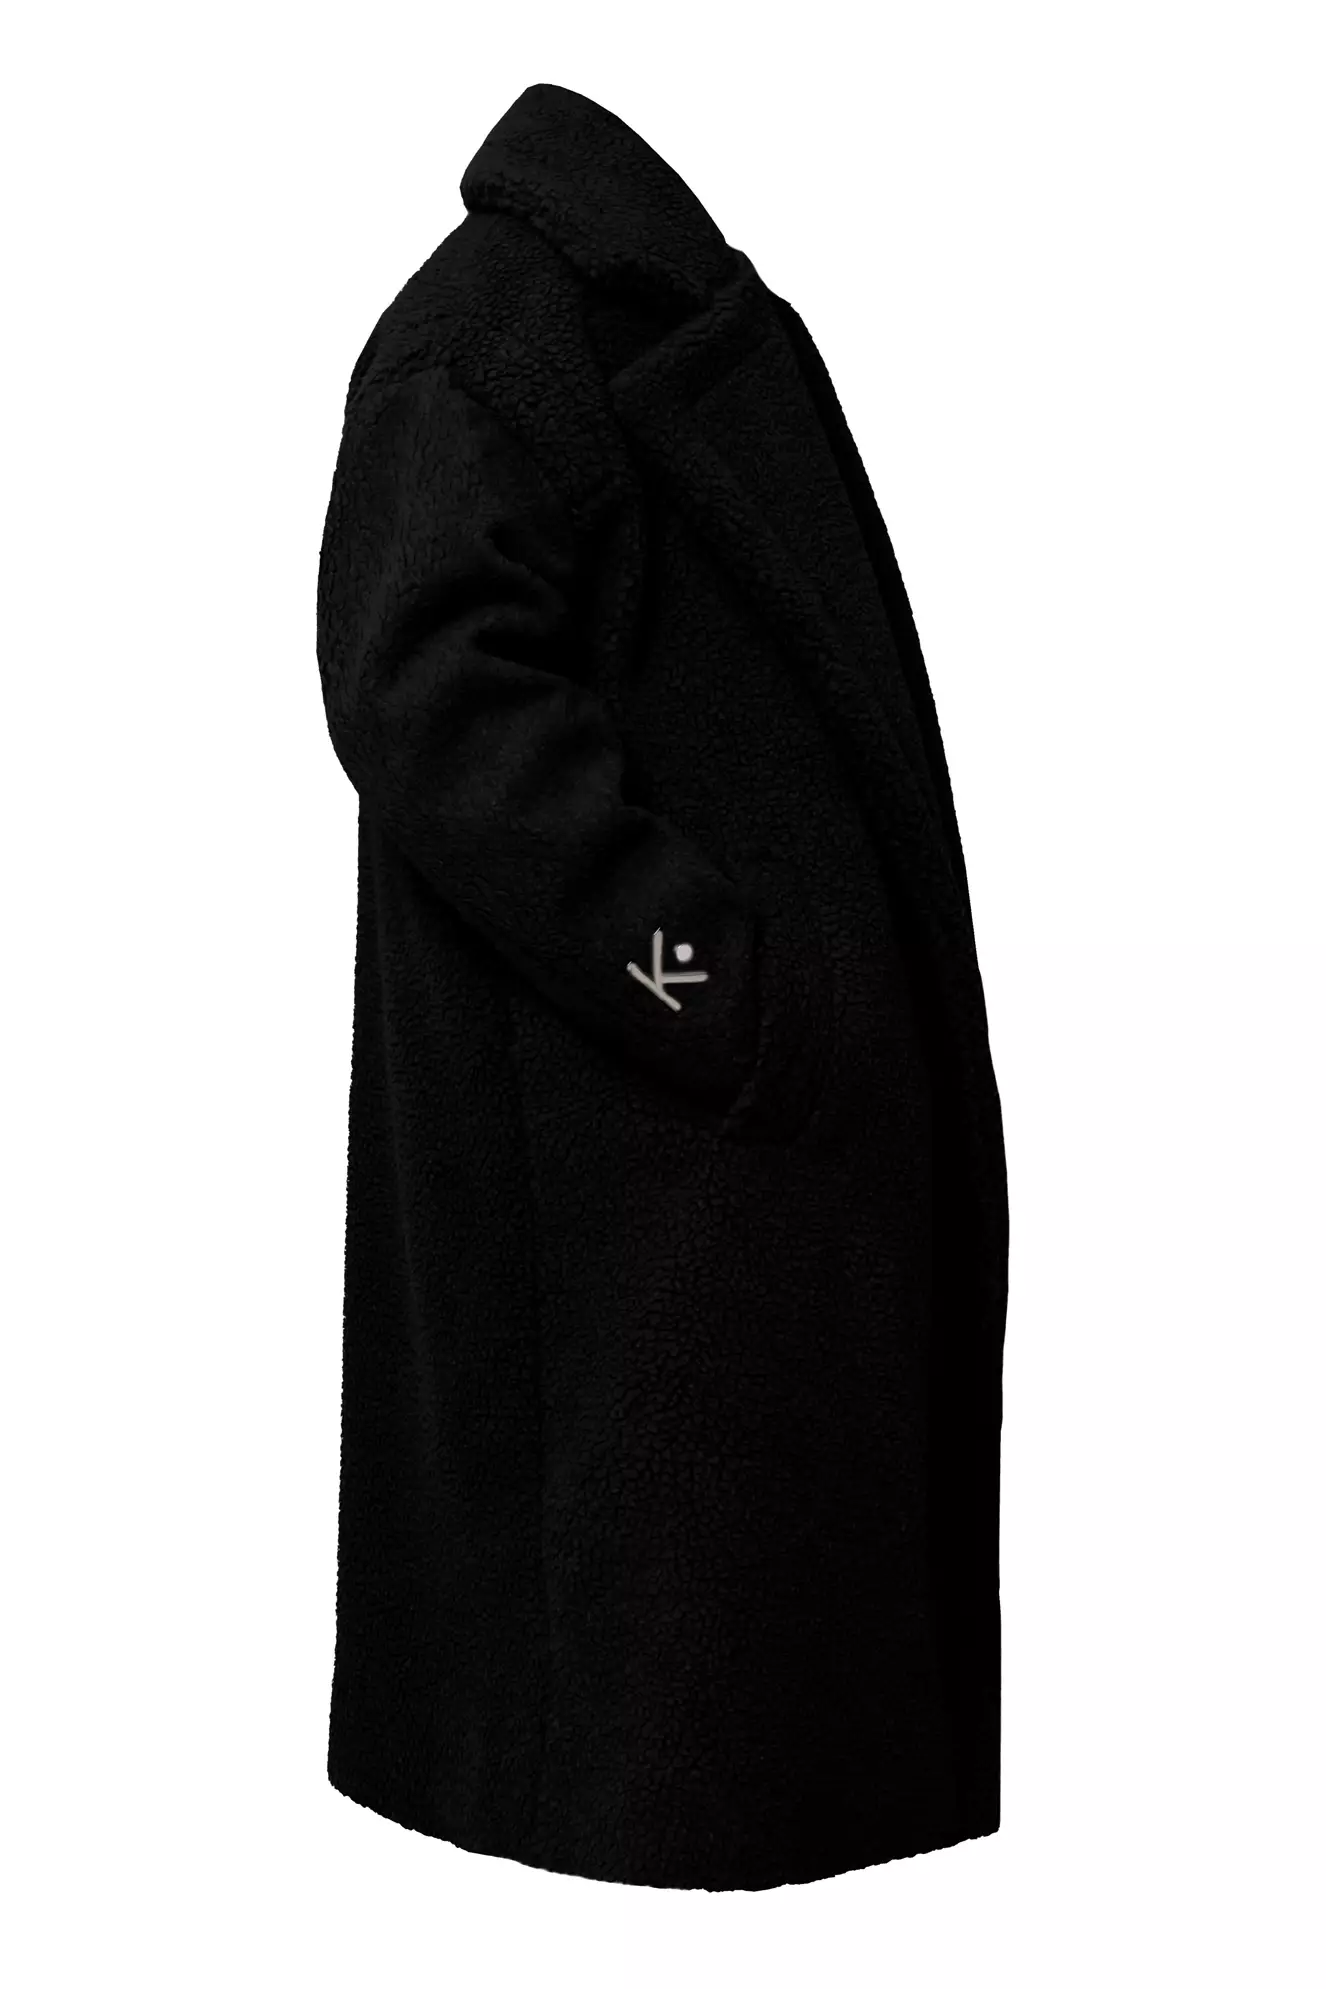 Black teddy bear long sleeve maxi coat